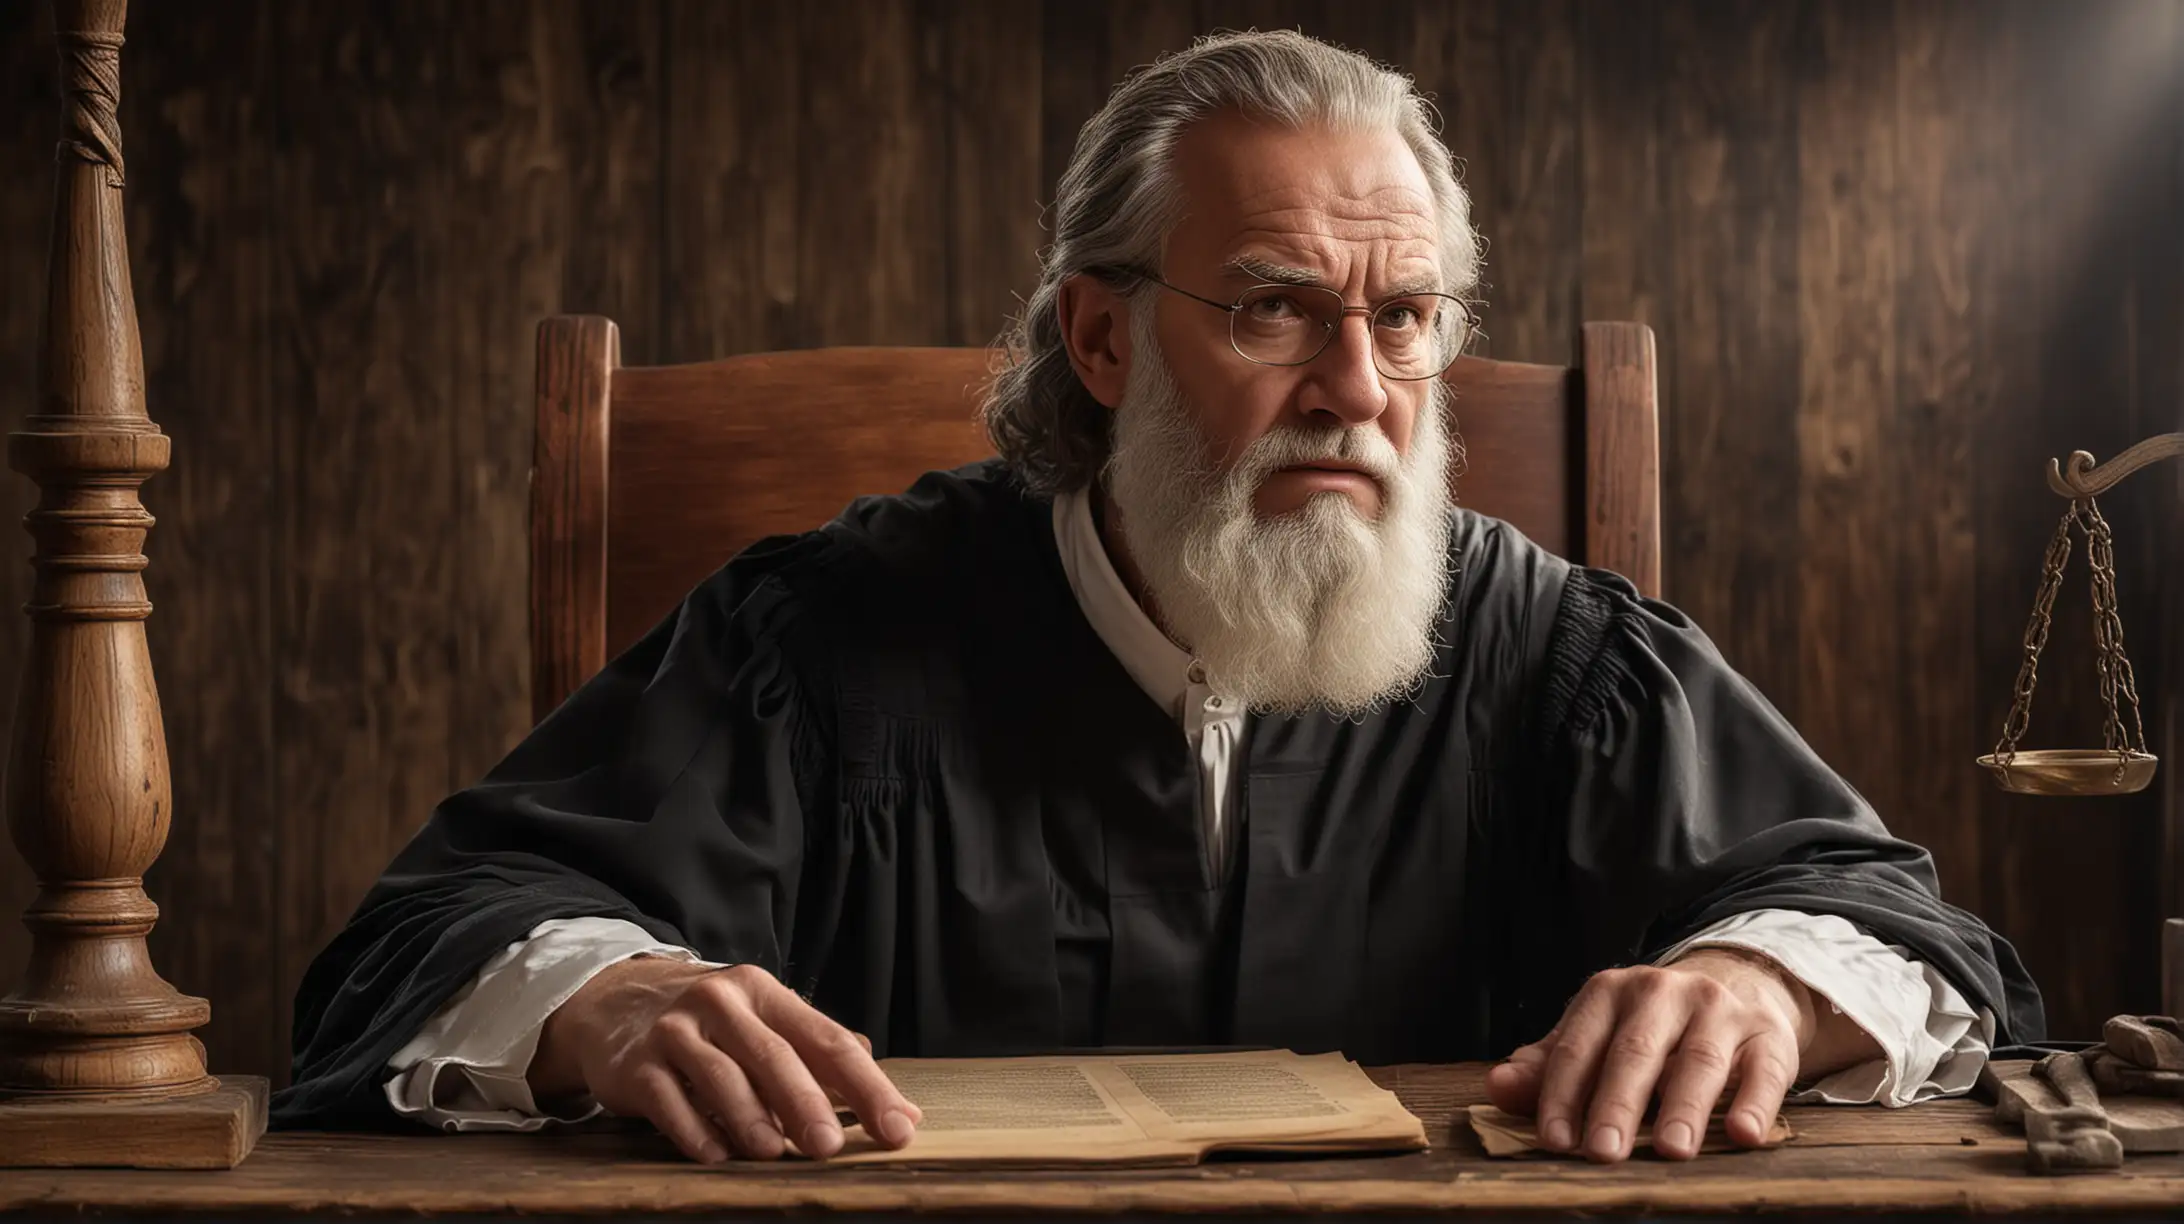 Biblical Era Judge Sitting at Wooden Desk